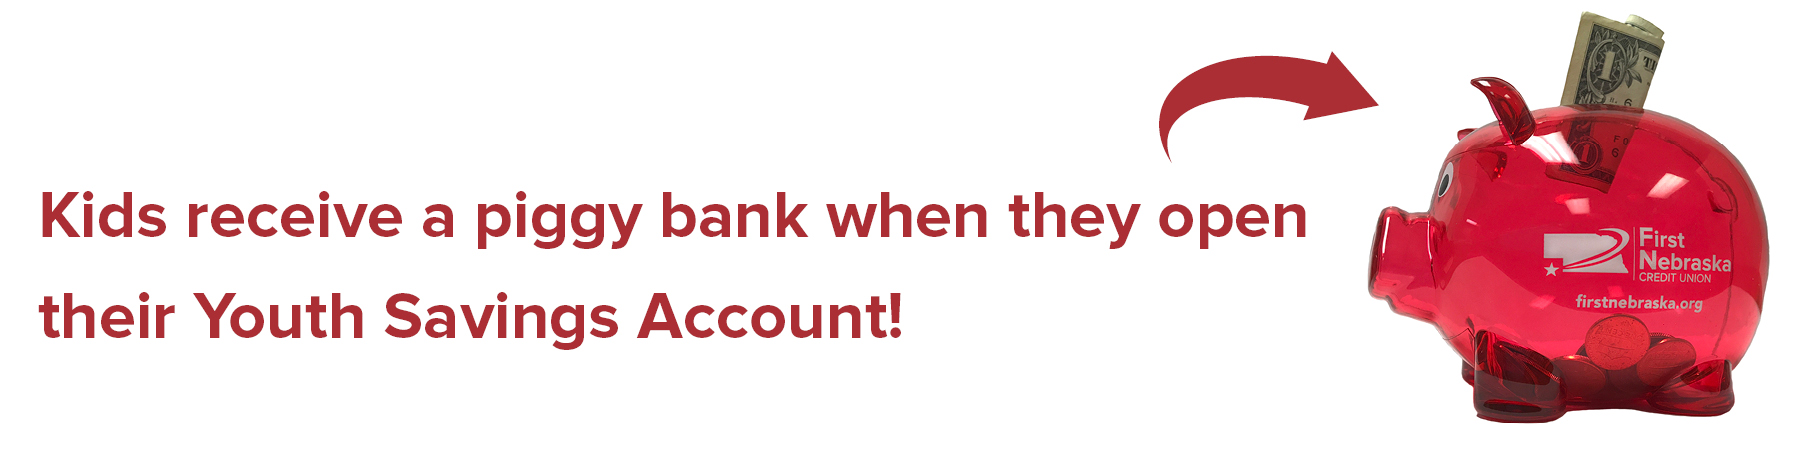 get a piggy bank when you open a youth savings account